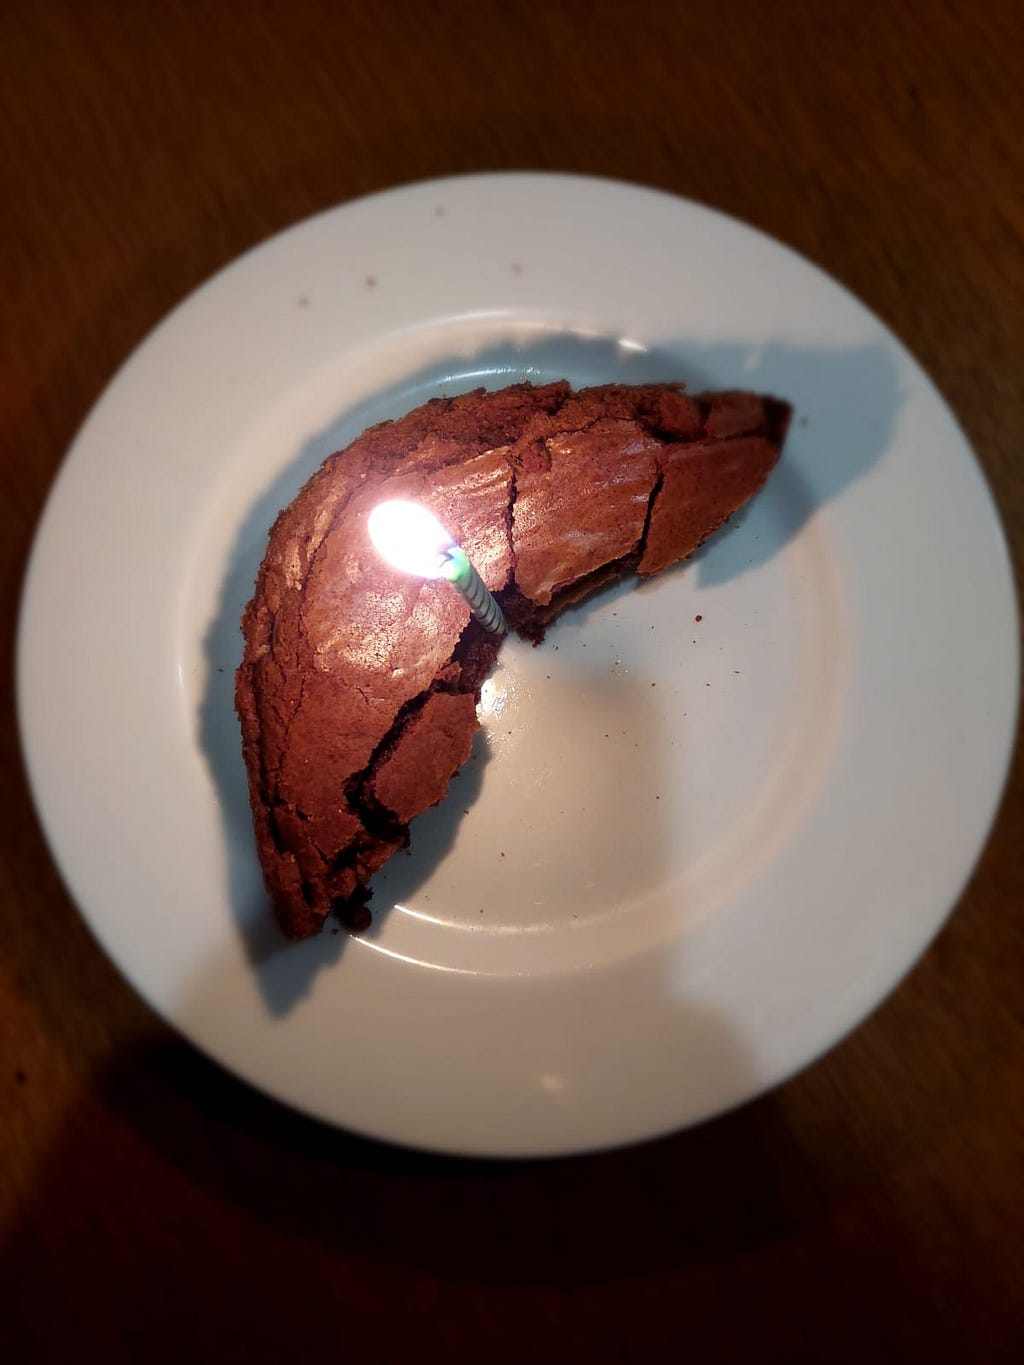 Home-made chocolate cake on husband’s birthday